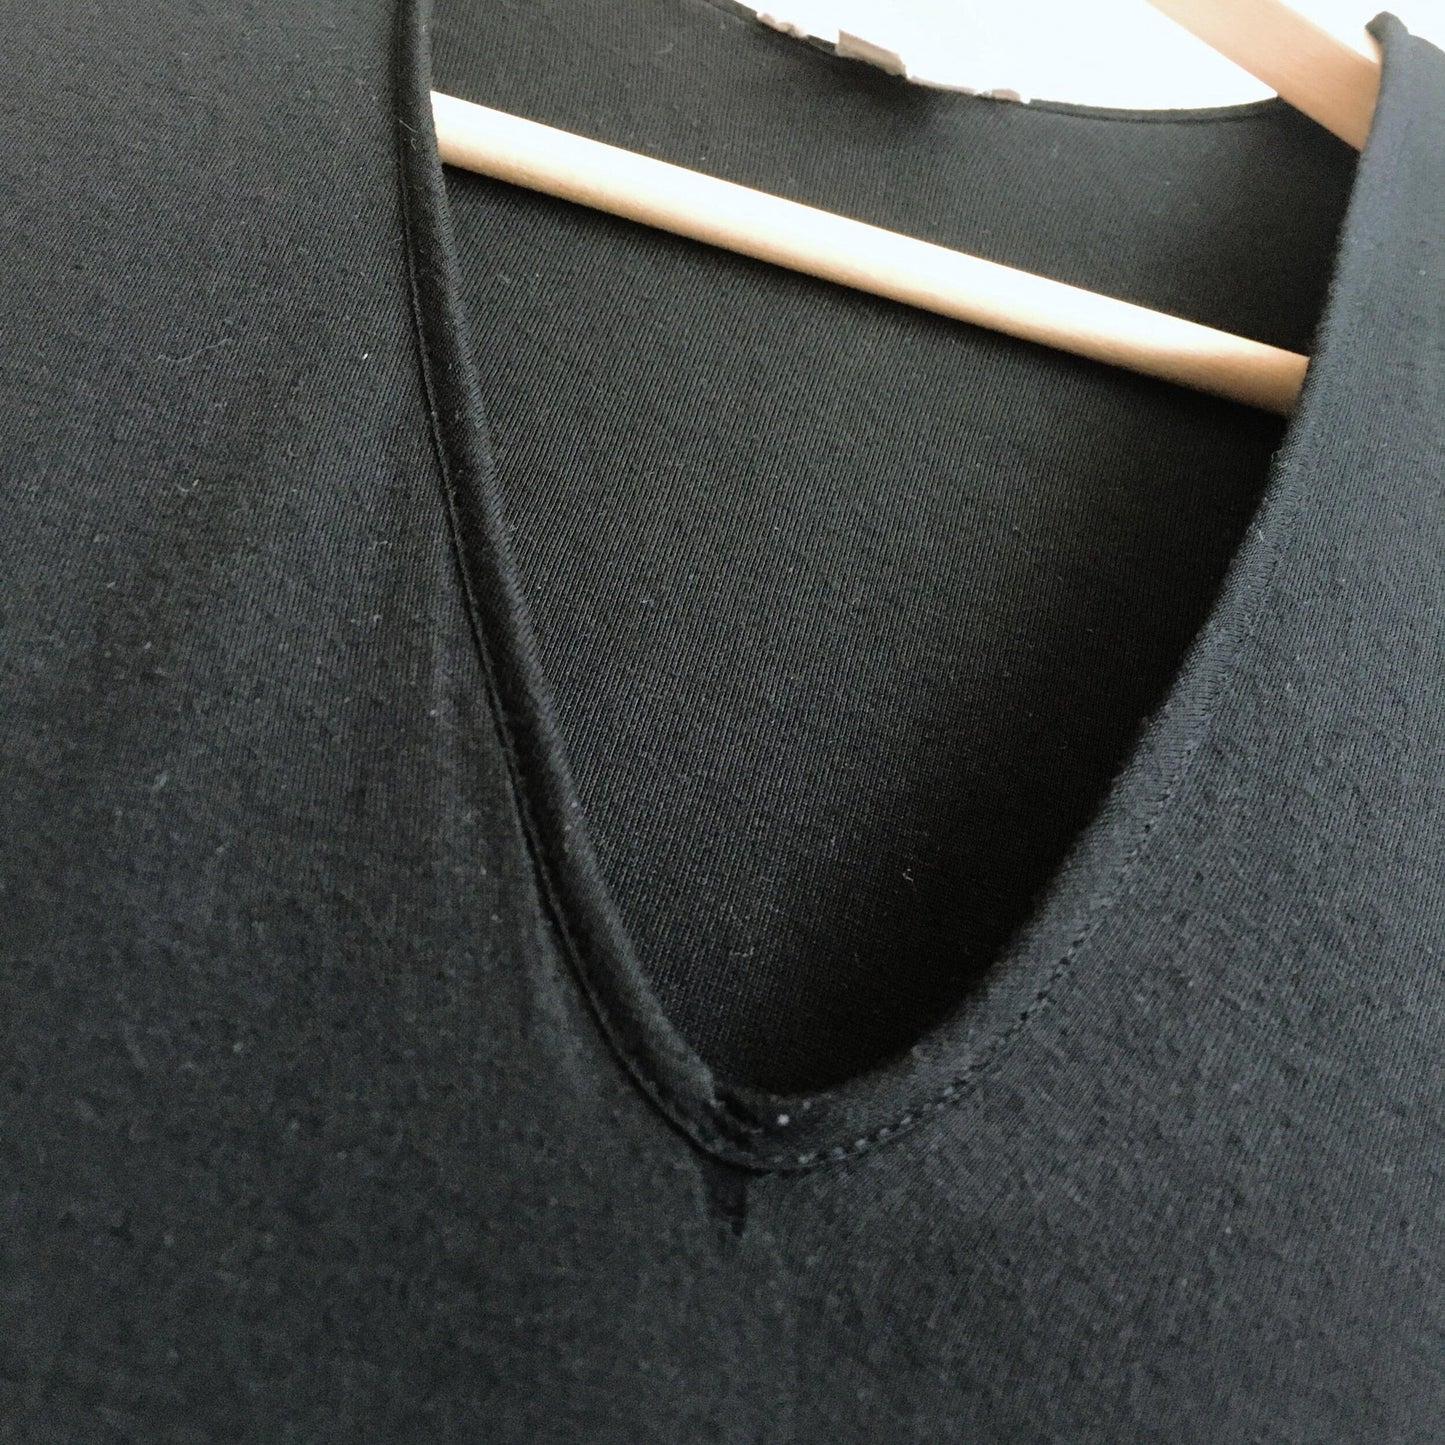 Helmut Lang asymmetrical draped knotted jersey dress - size xs (P)